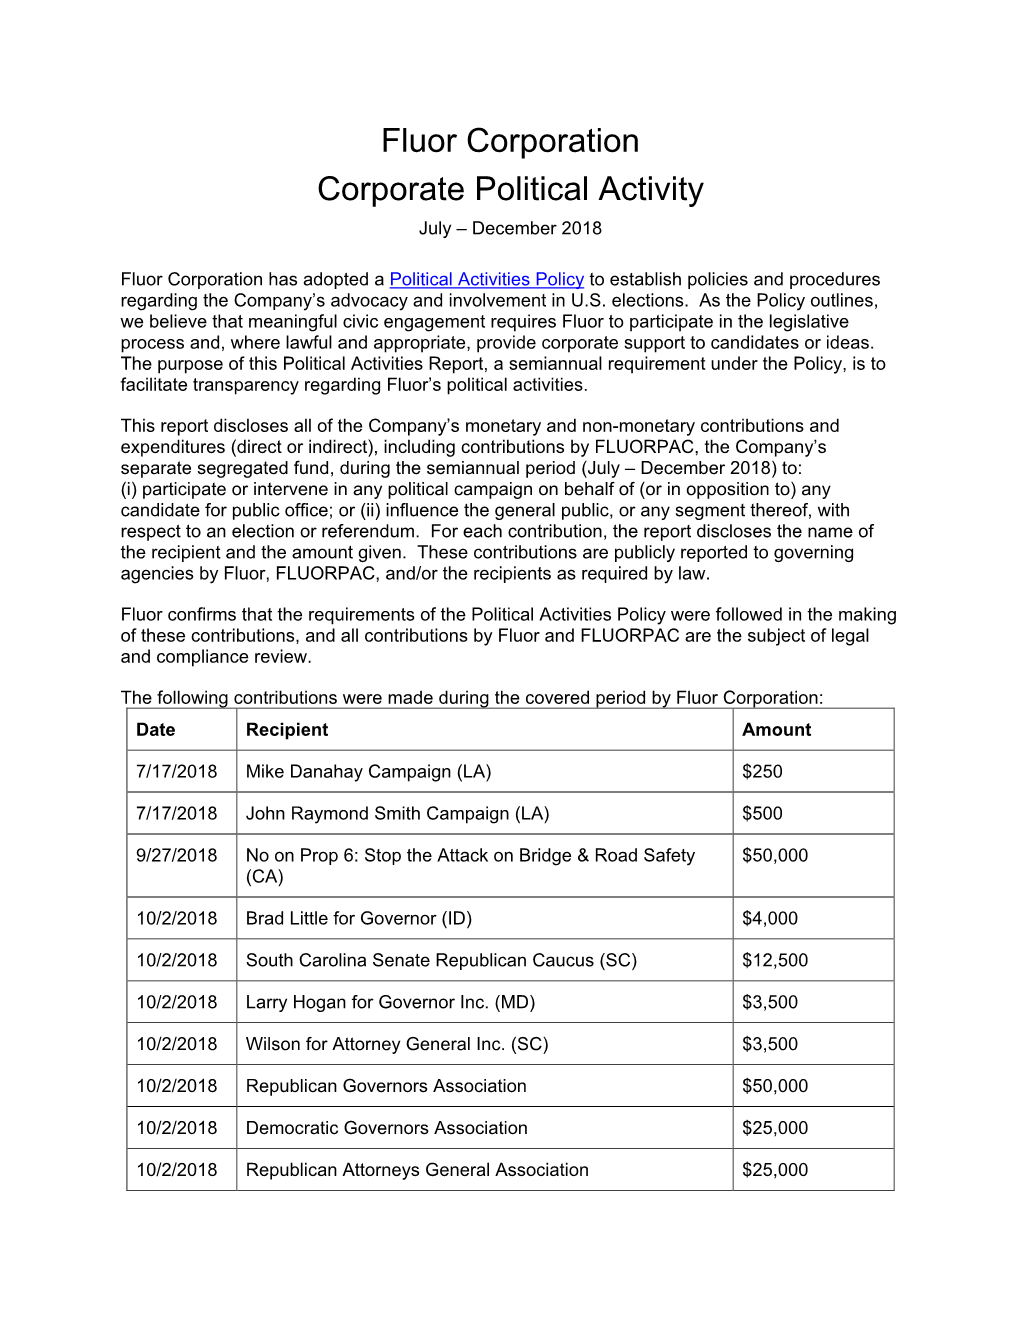 Fluor Corporation Corporate Political Activity July – December 2018